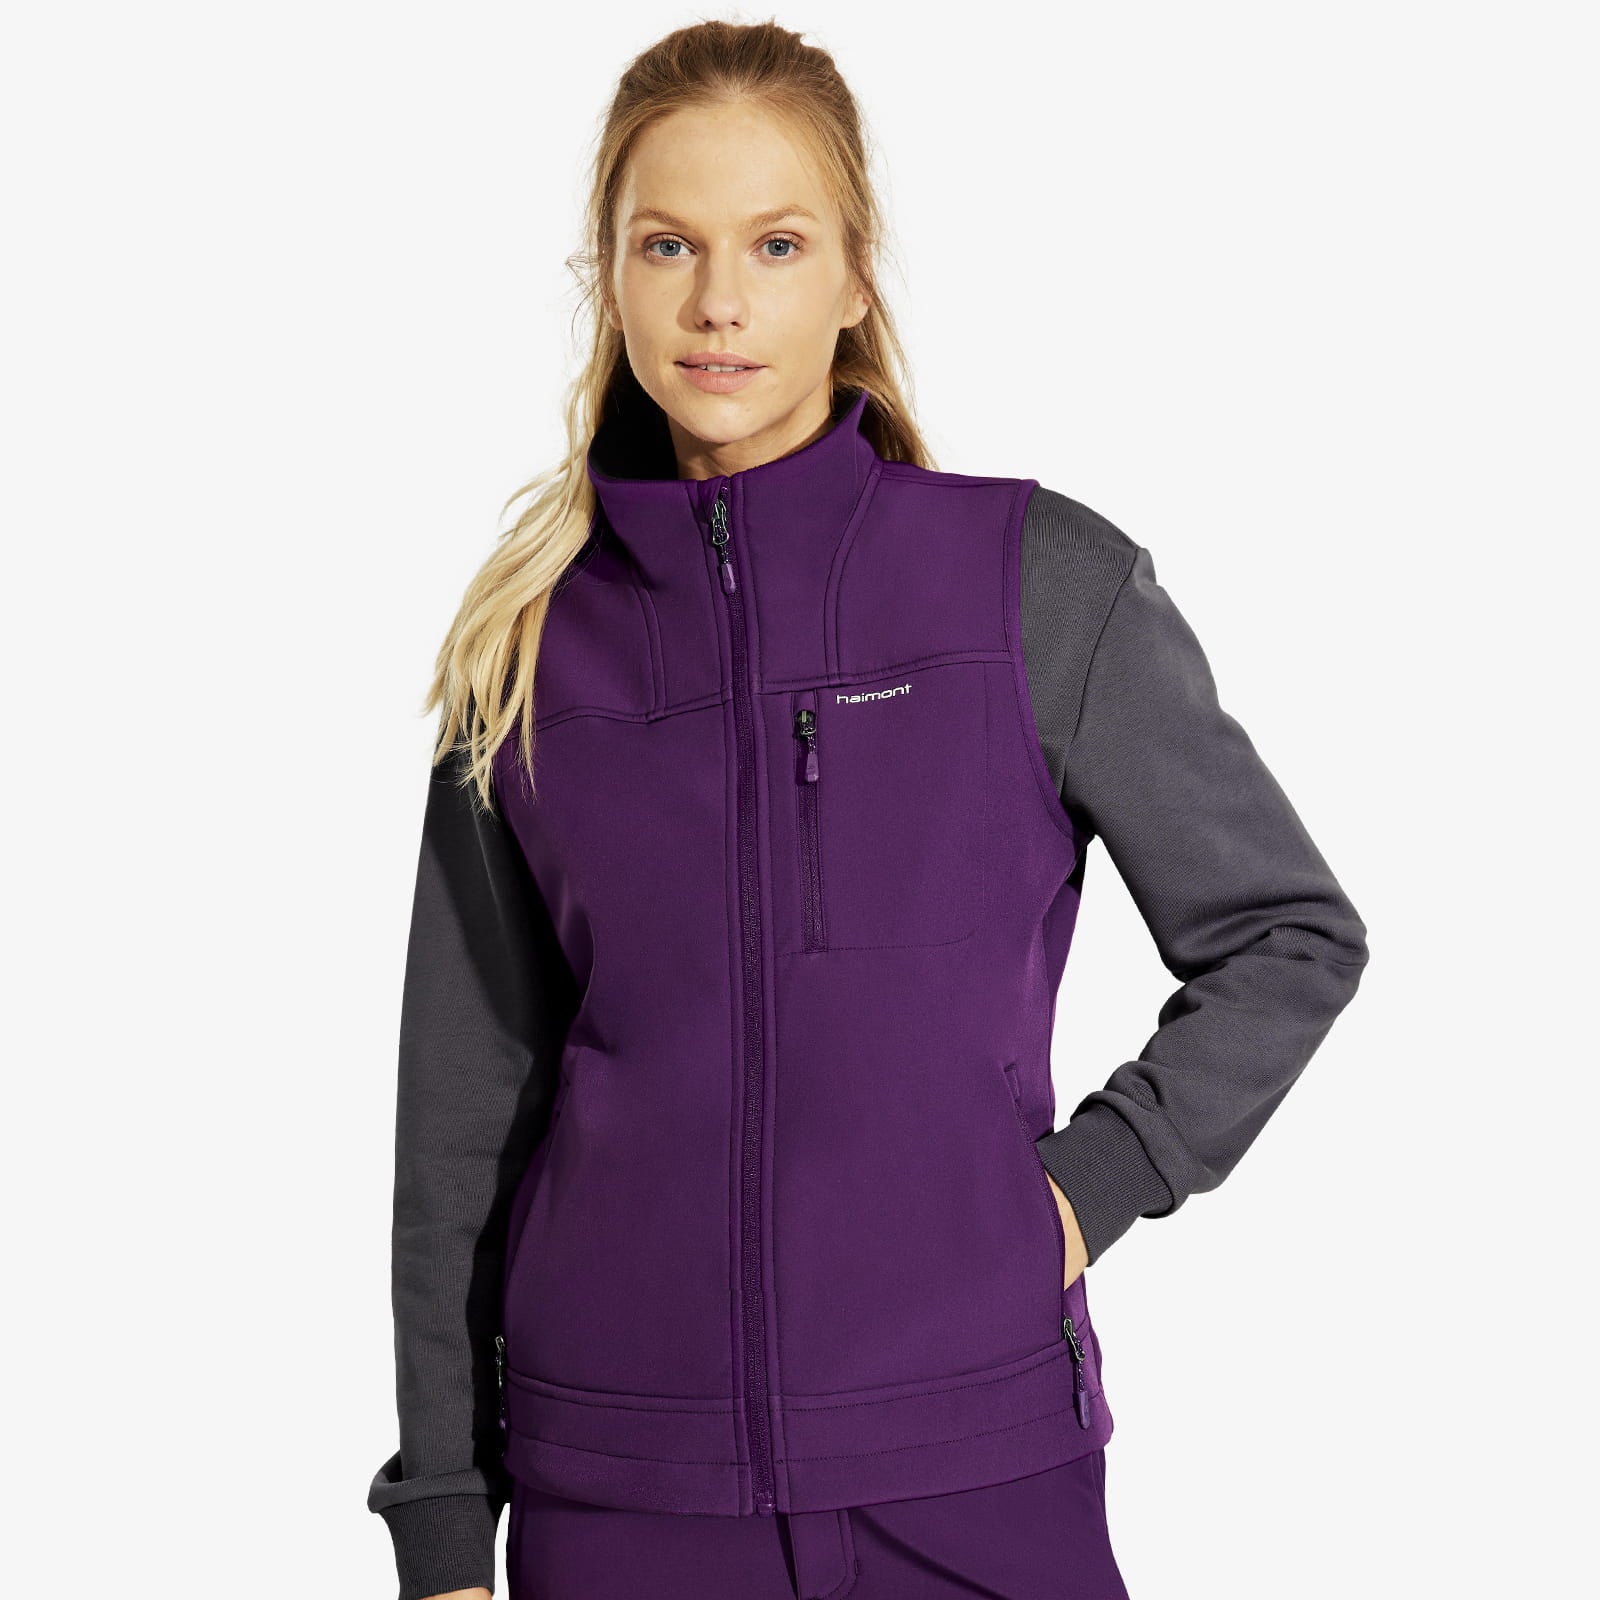  Womens Fleece Lined Lightweight Vest Softshell Sleeveless  Hooded Jacket Waterproof For Running Hiking Travel Khaki L